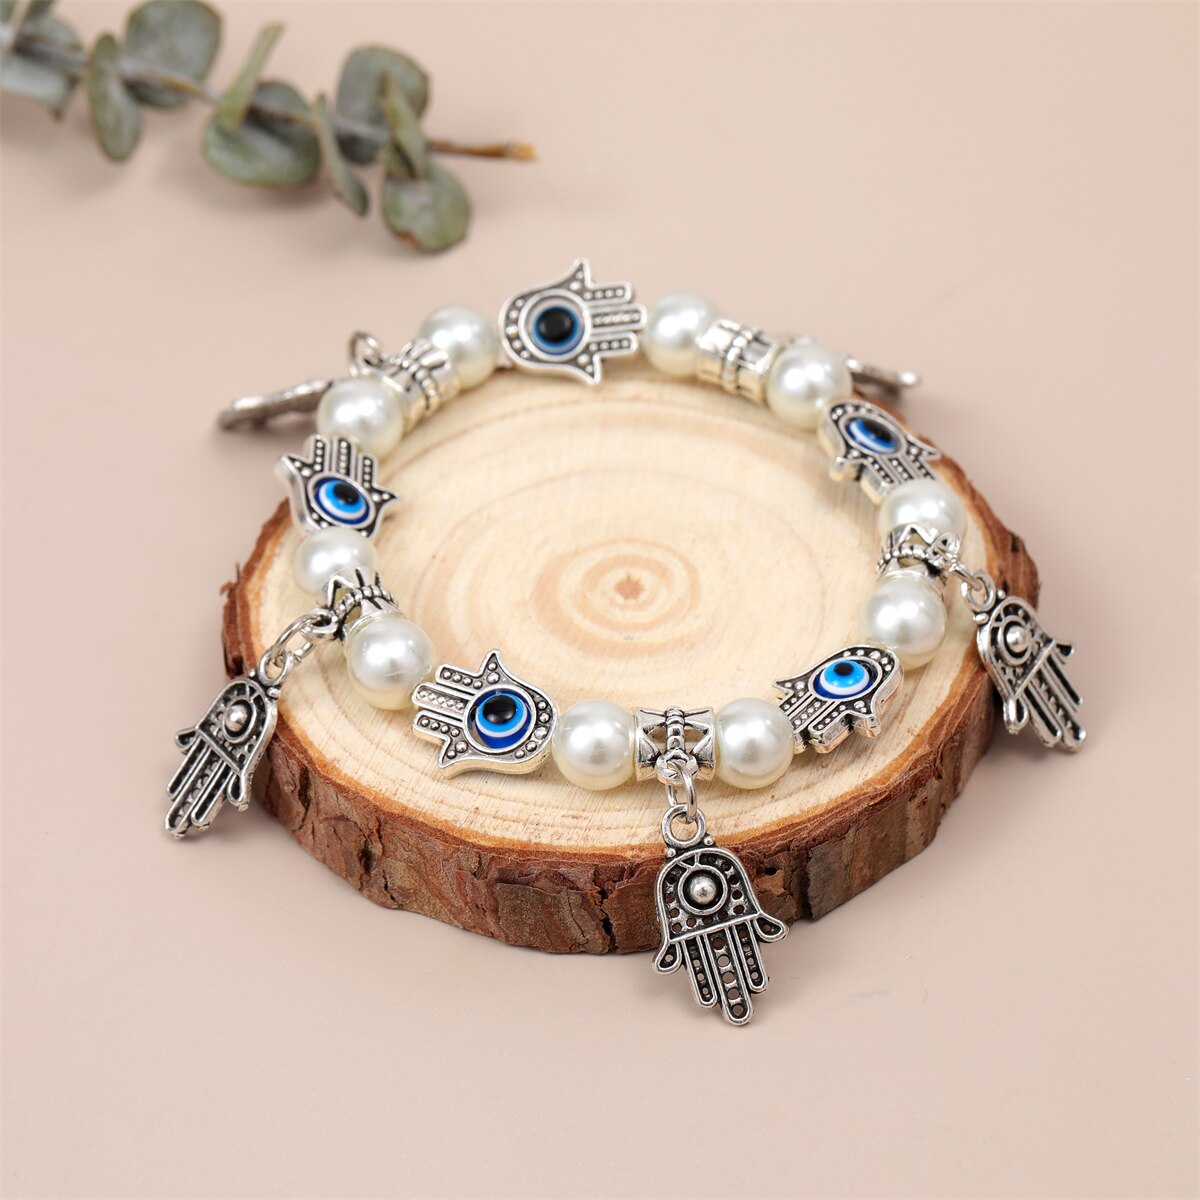 Fashion Blue Turkey Evil Eye Fatima Hand Beaded Charms Bracele for Women Men Pearls Chain Elastic Yoga Party Jewelry